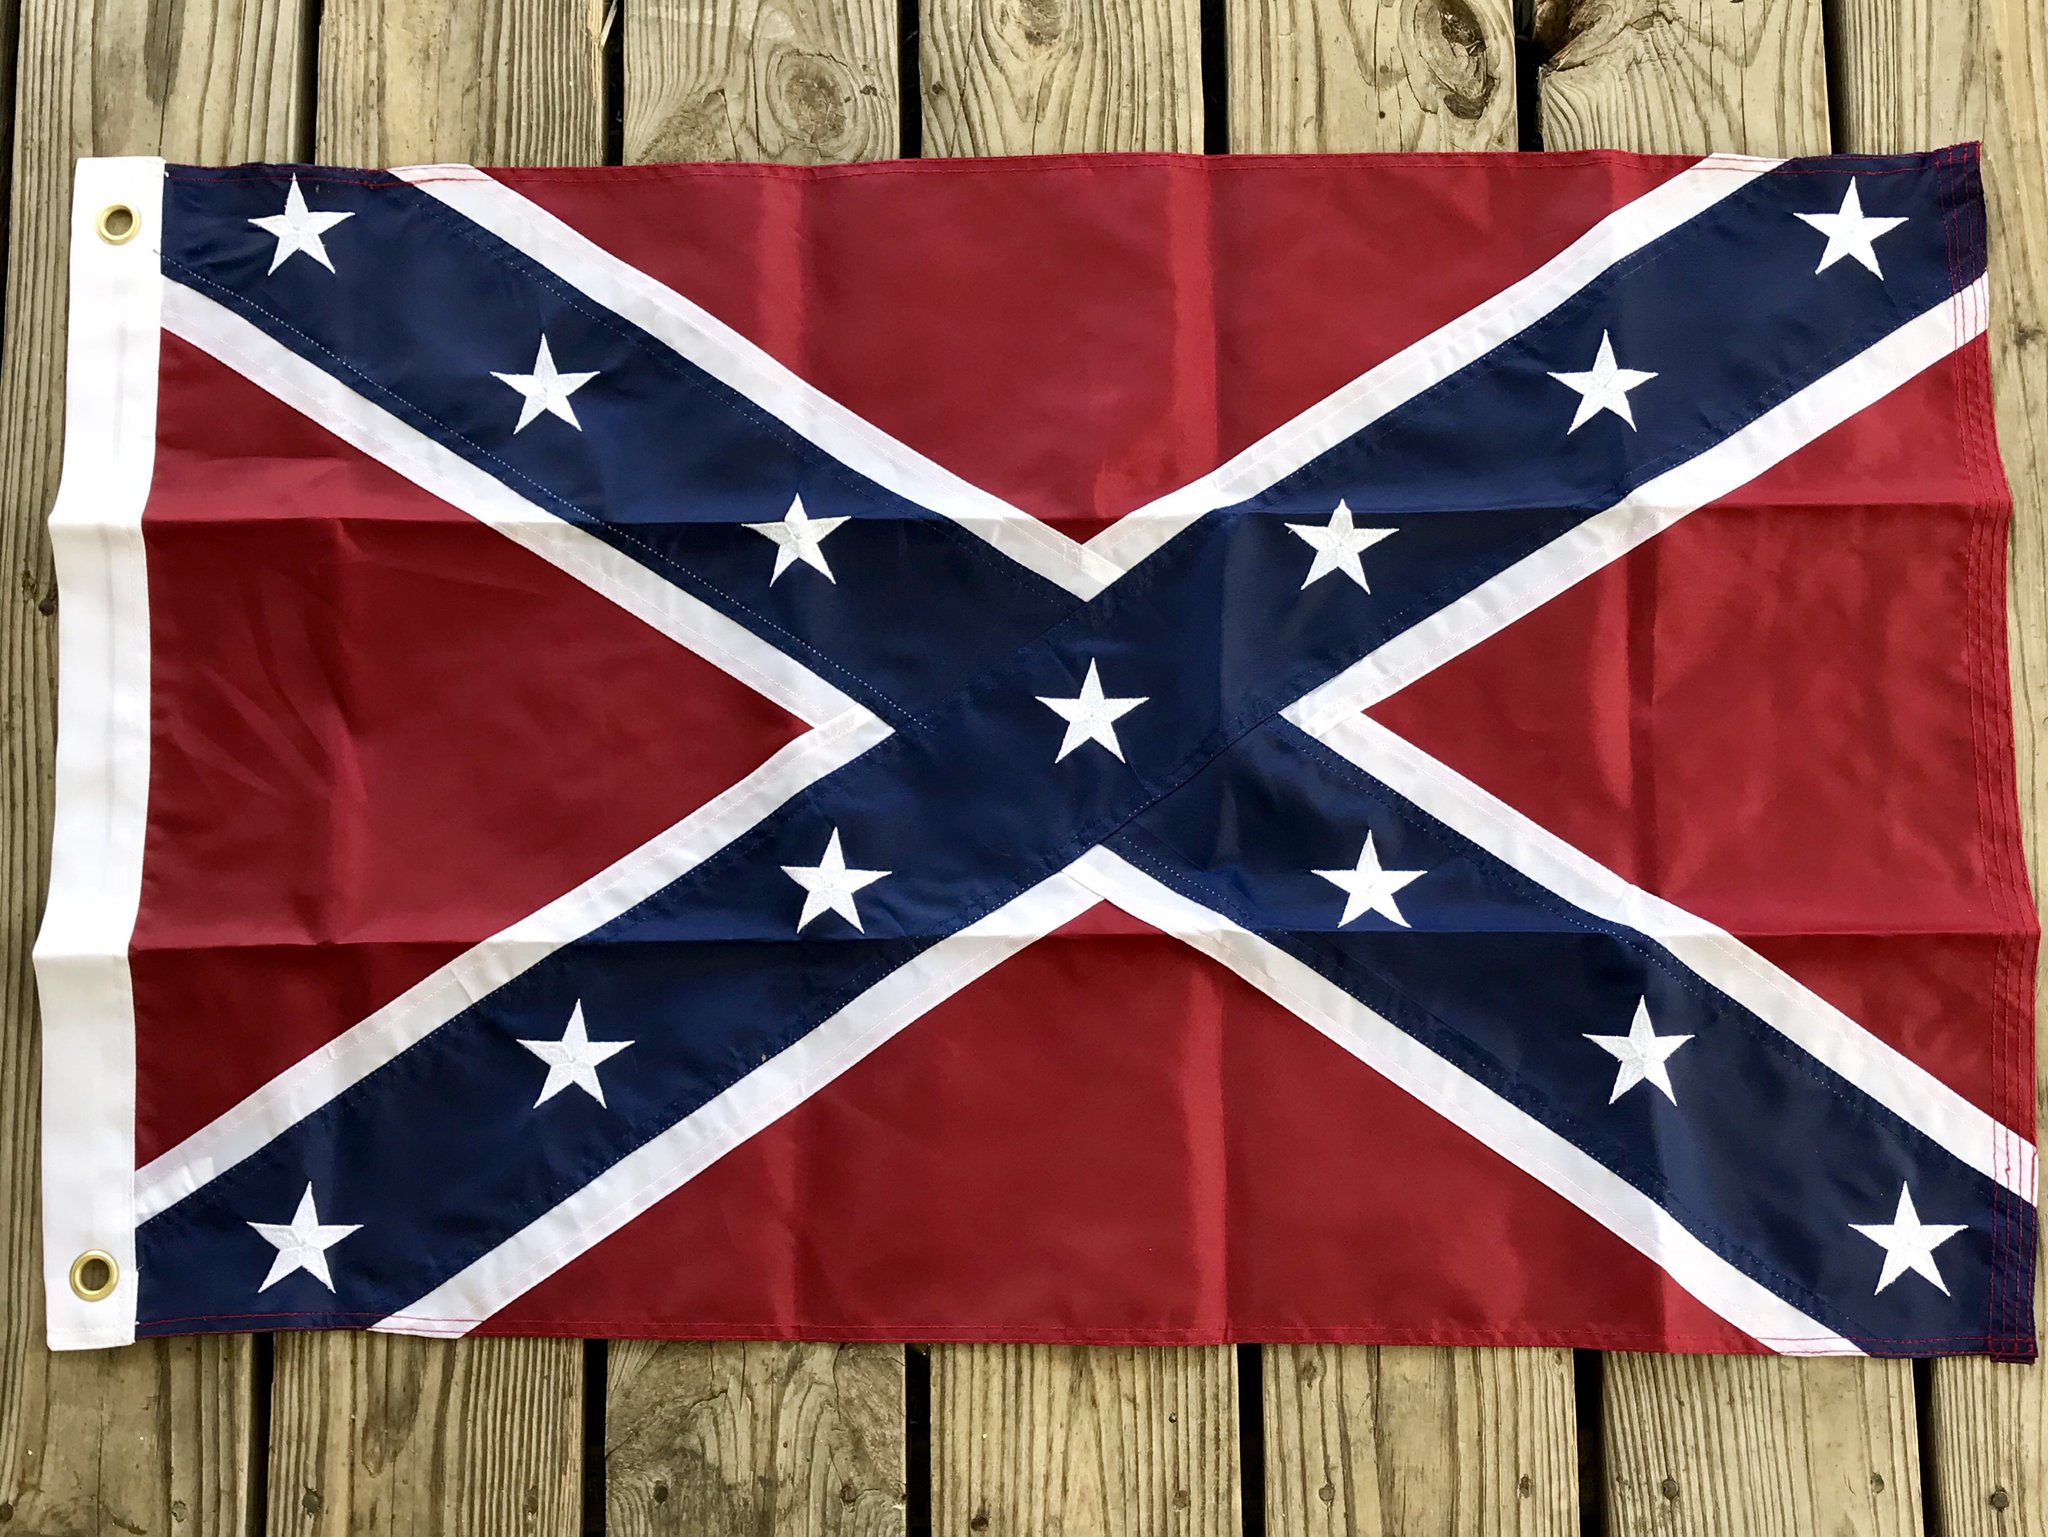 Confederate-flag-image-for-website.jpg